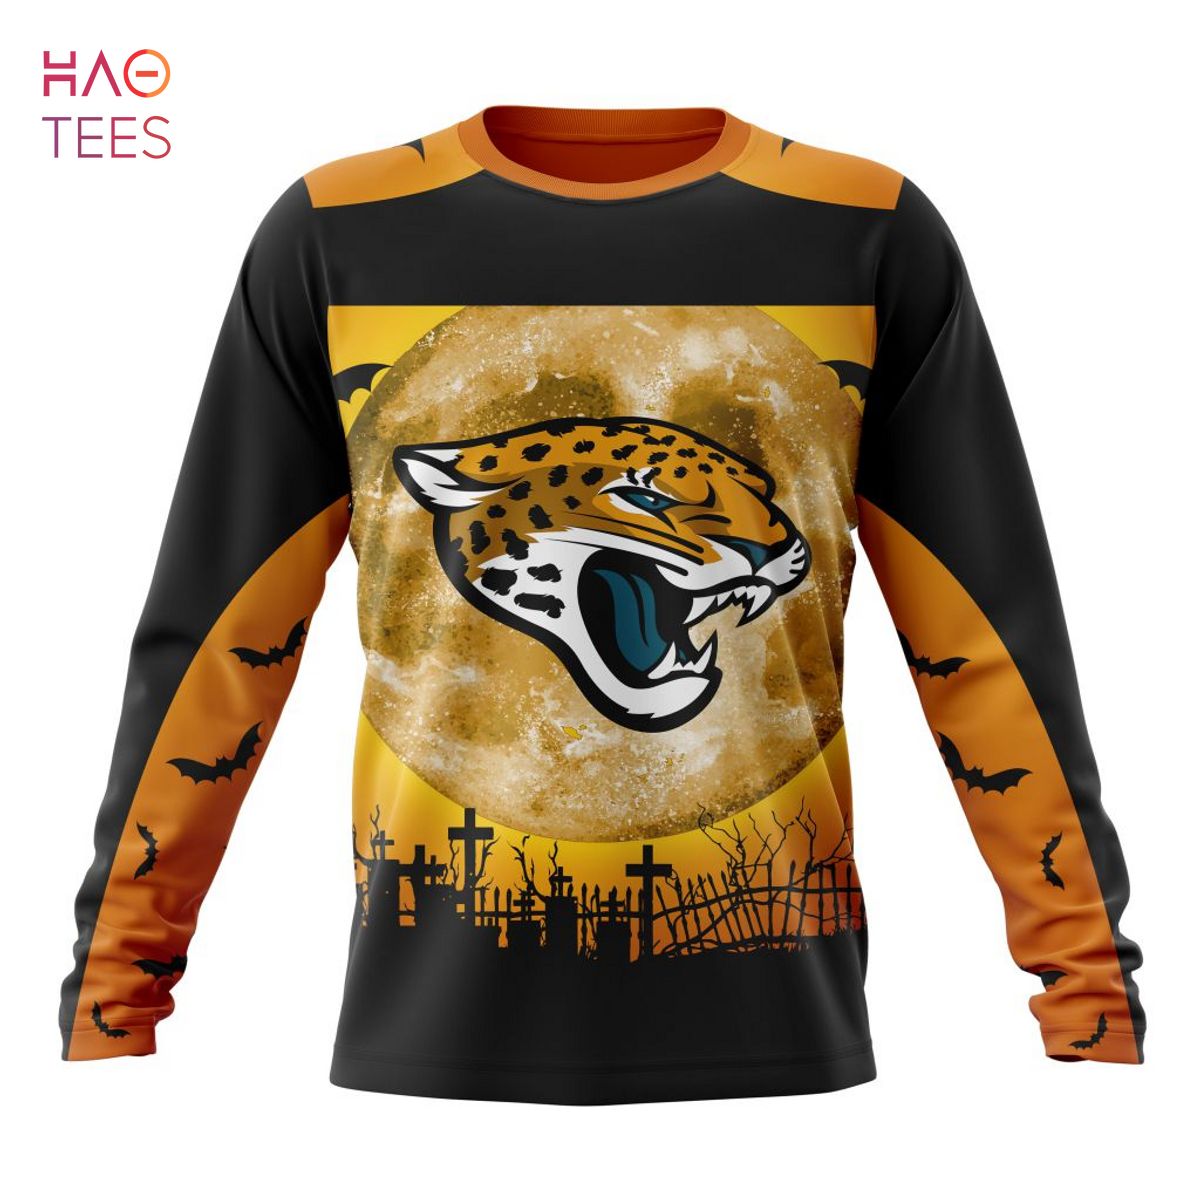 BEST NFL Jacksonville Jaguars, Specialized Halloween Concepts Kits 3D Hoodie